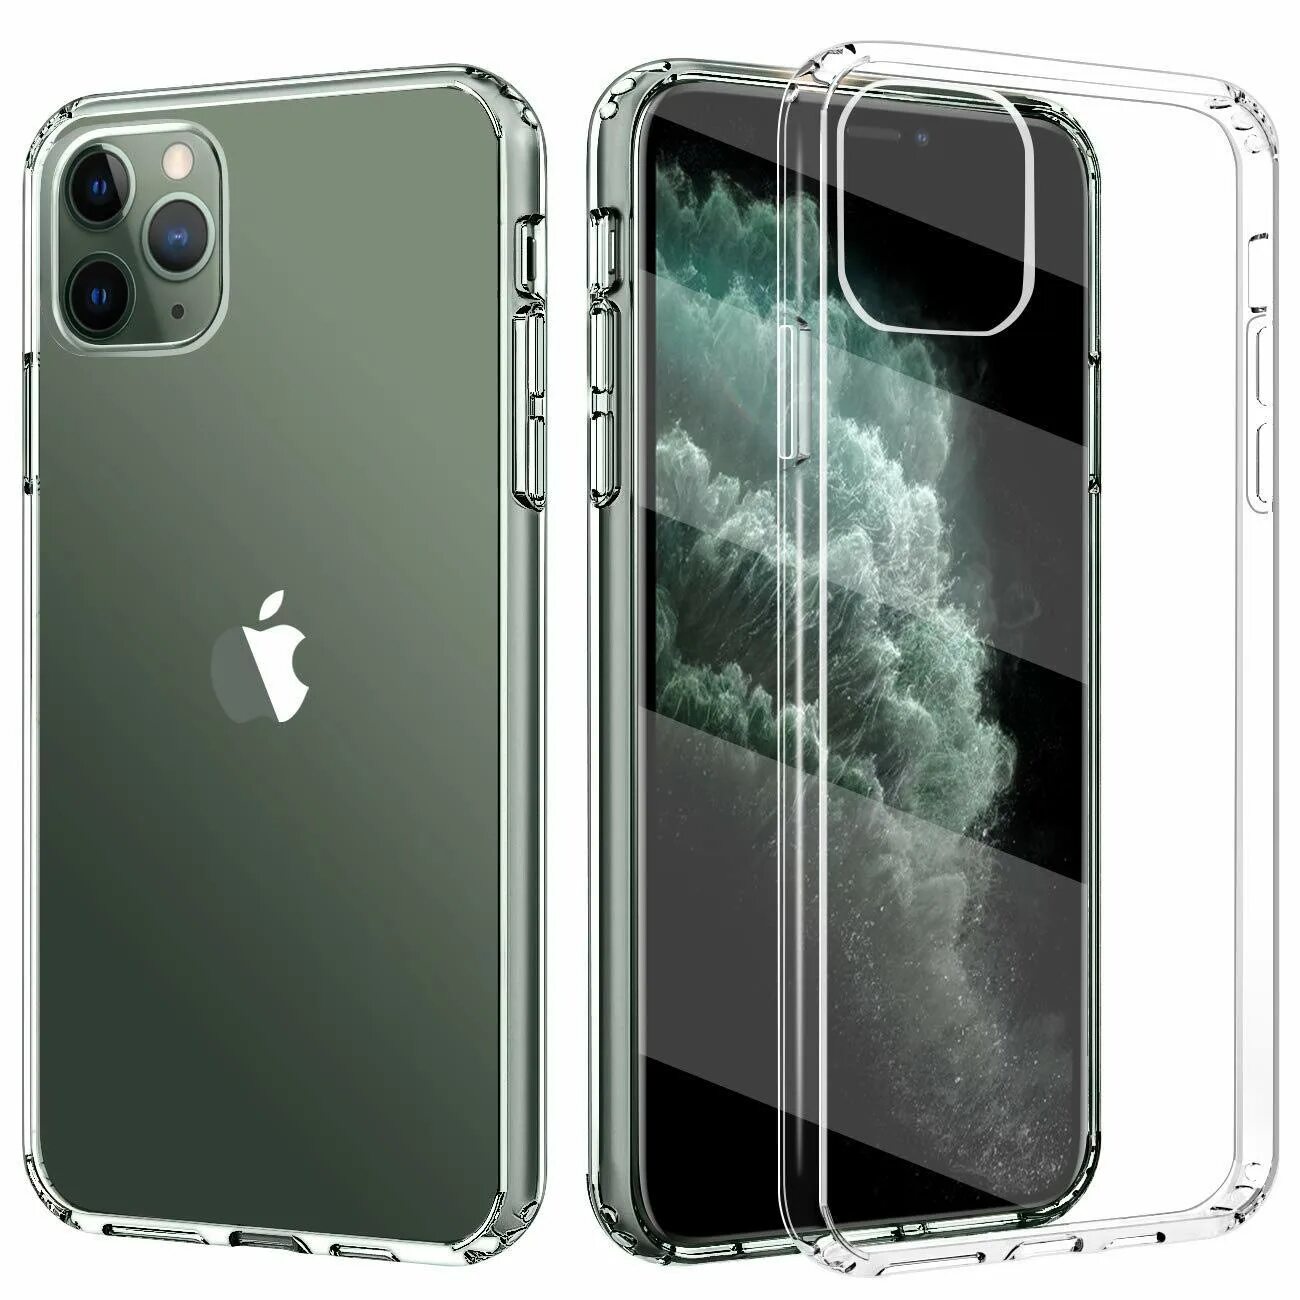 Pro max чехол. Iphone 11 Pro Max Case. Чехол iphone 11 Pro Max TPU. Apple iphone 11 Pro Clear Case. Iphone 11 Crystal Case Apple.